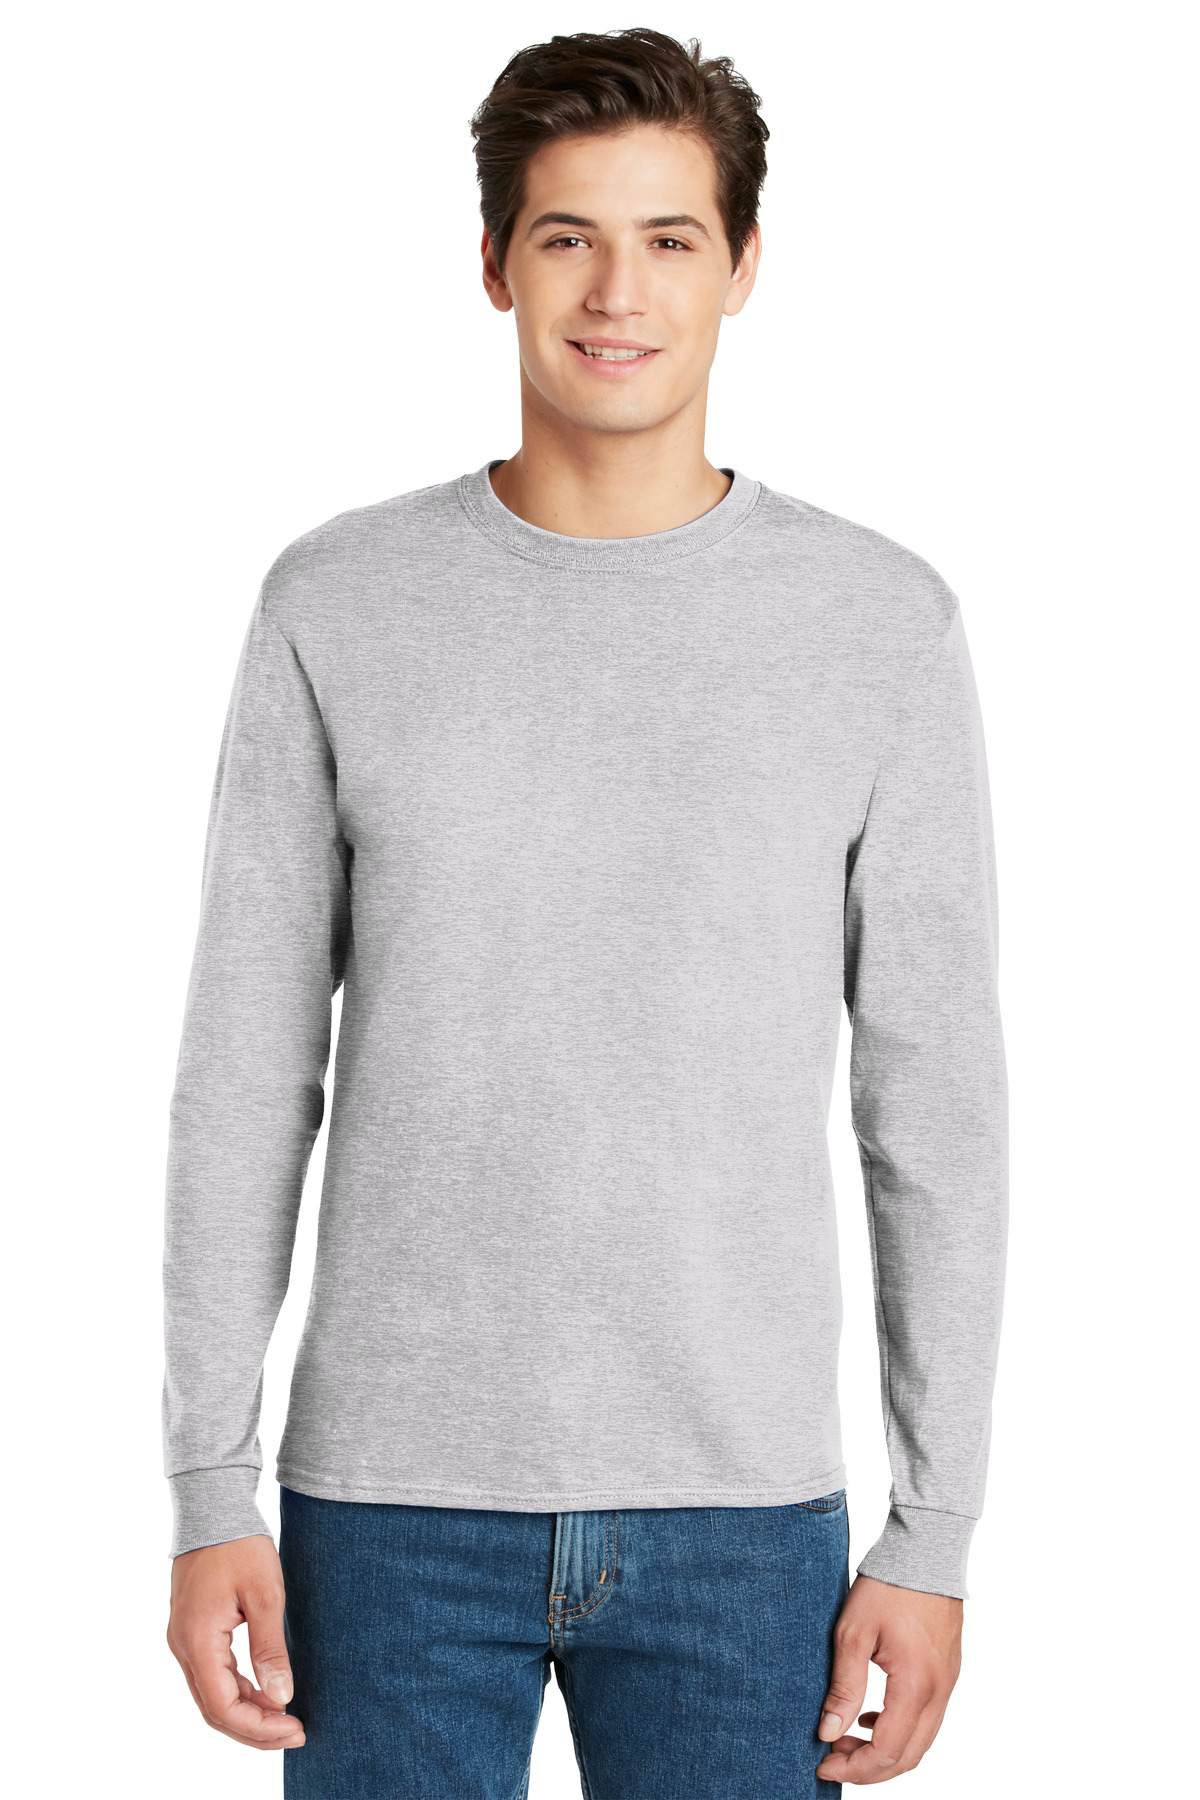 Hanes - Authentic 100% Cotton Long Sleeve T-Shirt....